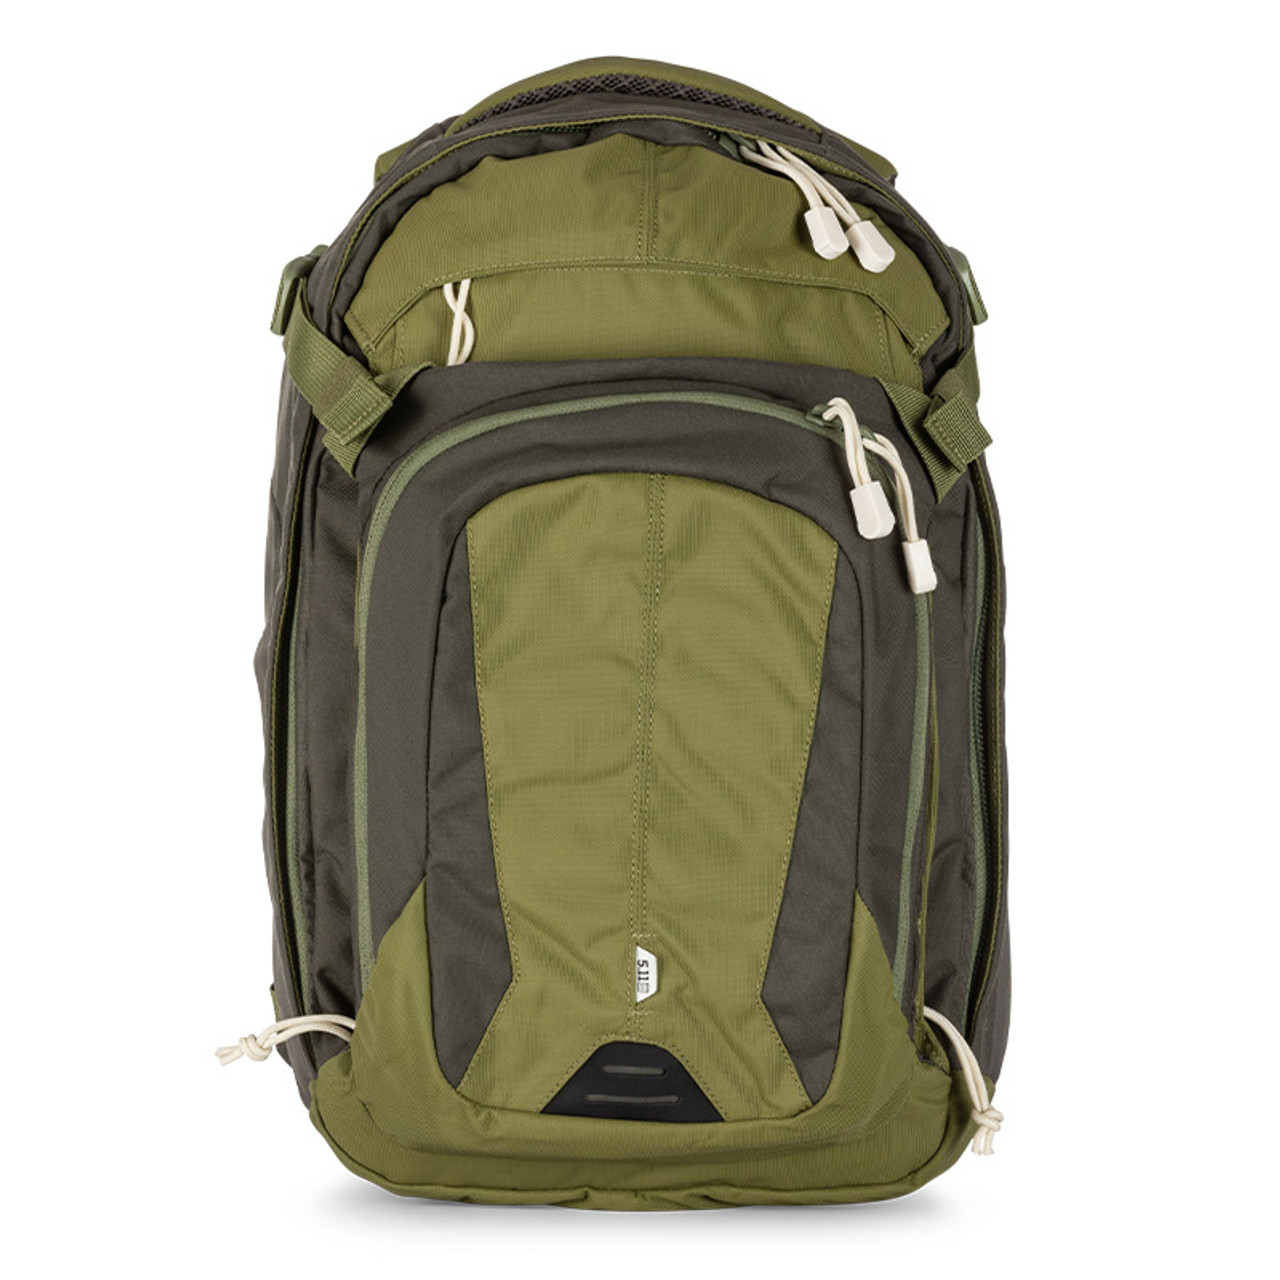 5.11 LV18 Backpack 30L - Parr Public Safety Equipment